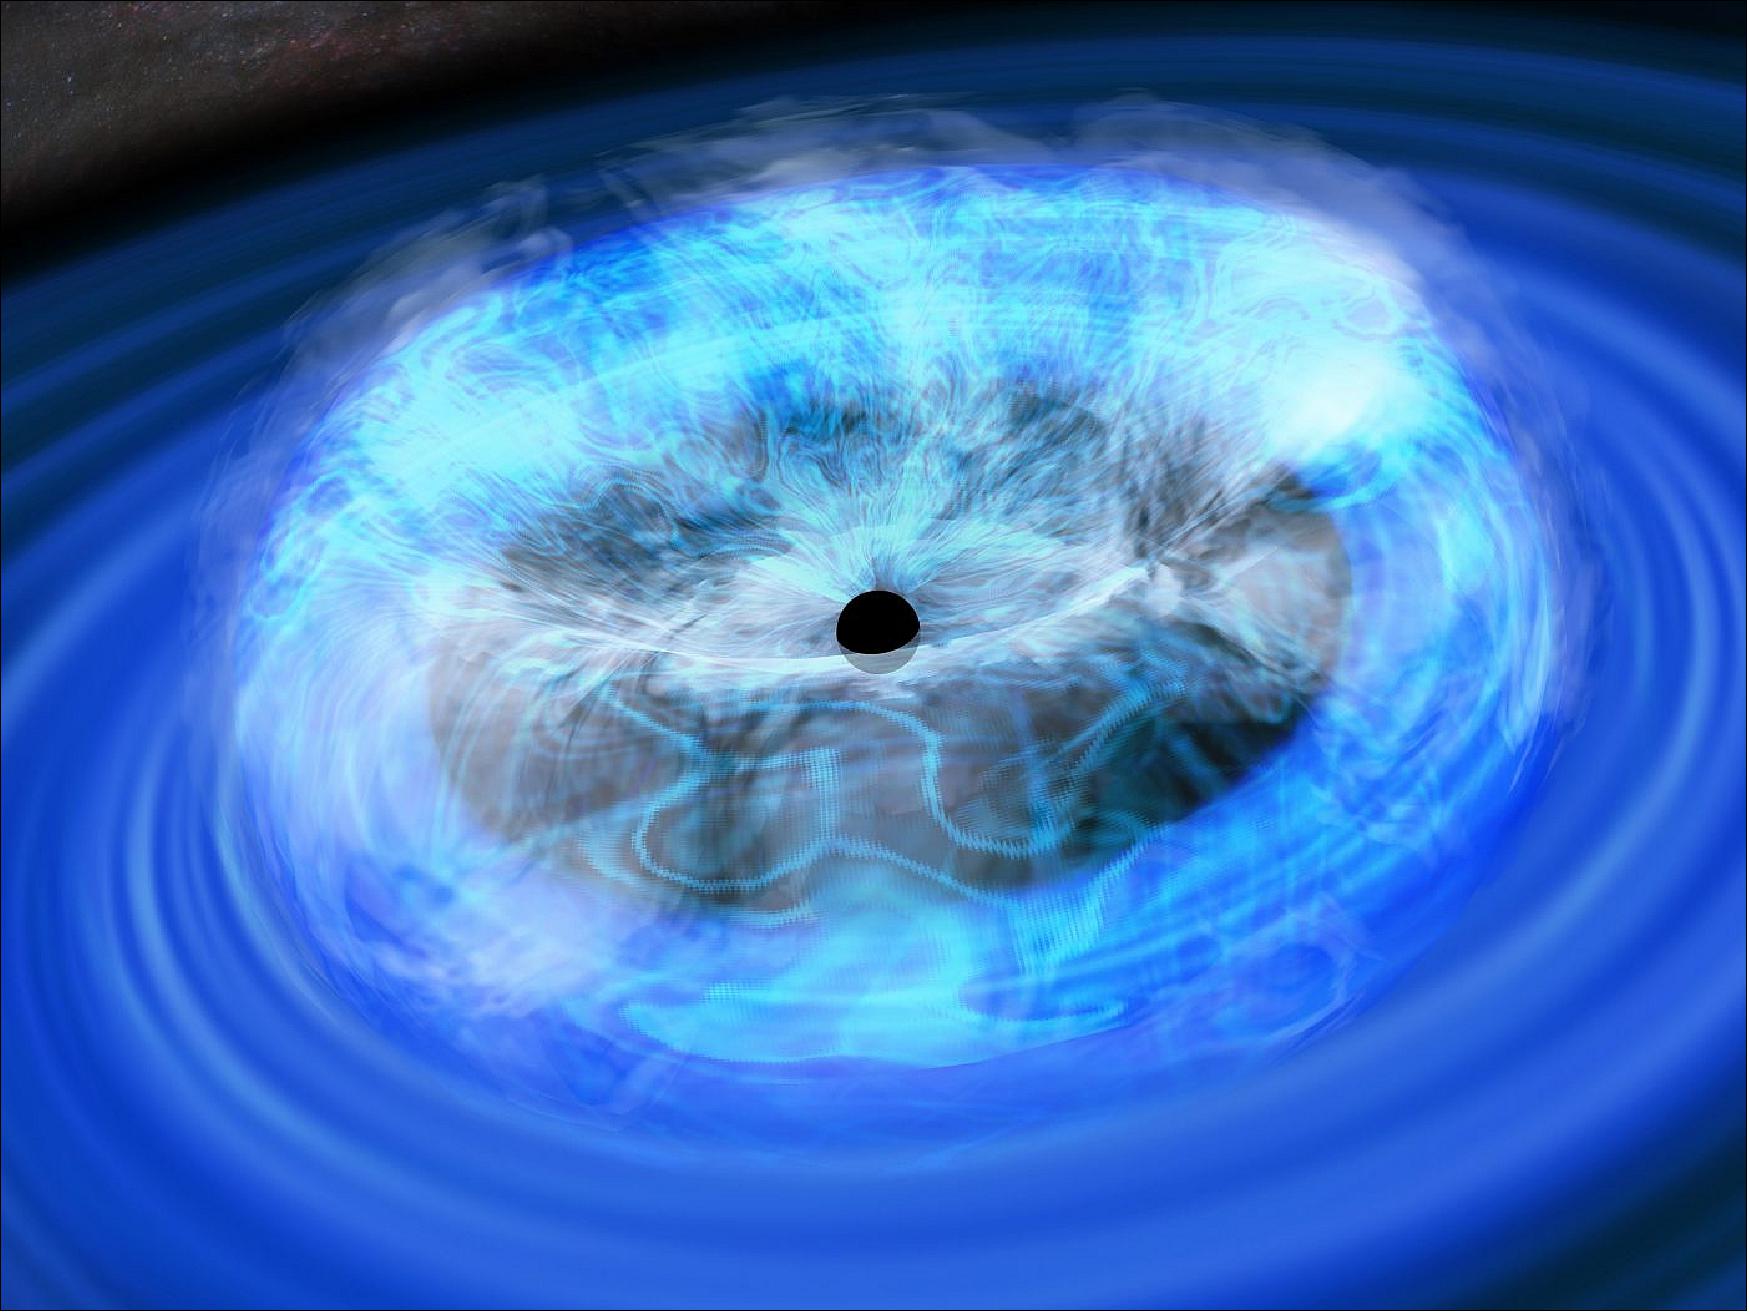 Figure 2: Artist's rendering of the corona around a black hole (image credit: RIKEN)